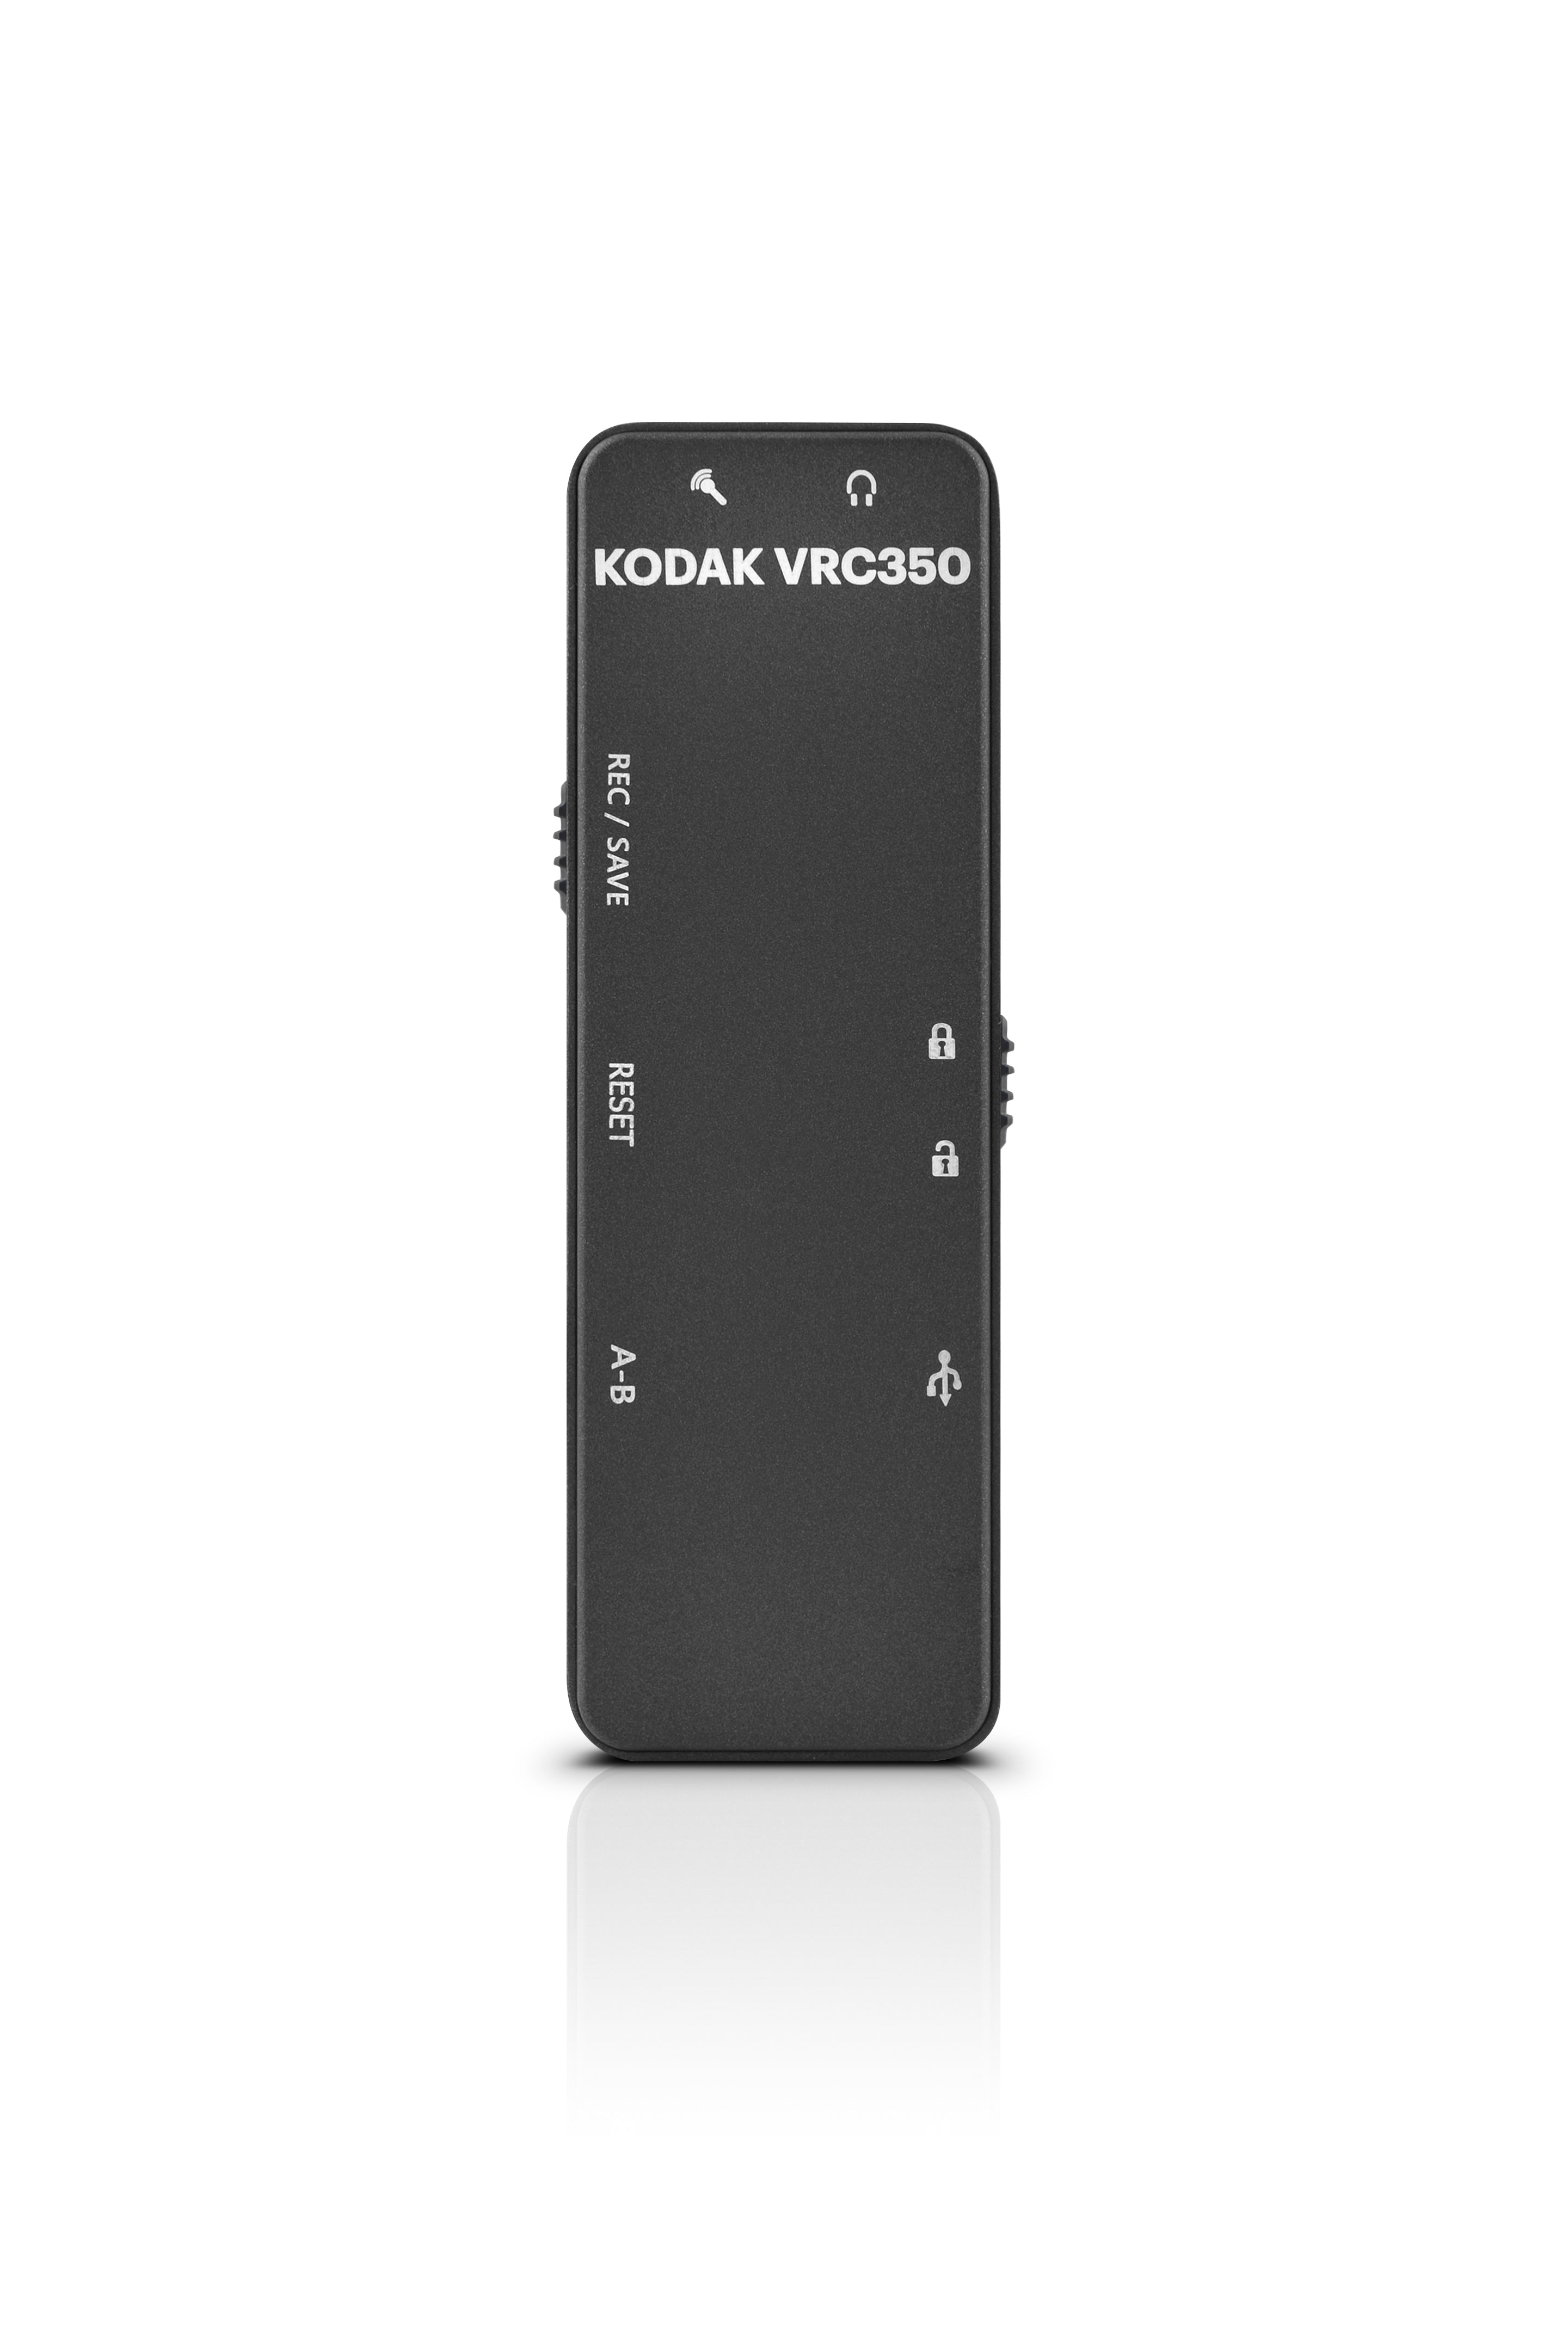 Kodak VRC350 Digital Voice Recorder with 8GB Memory